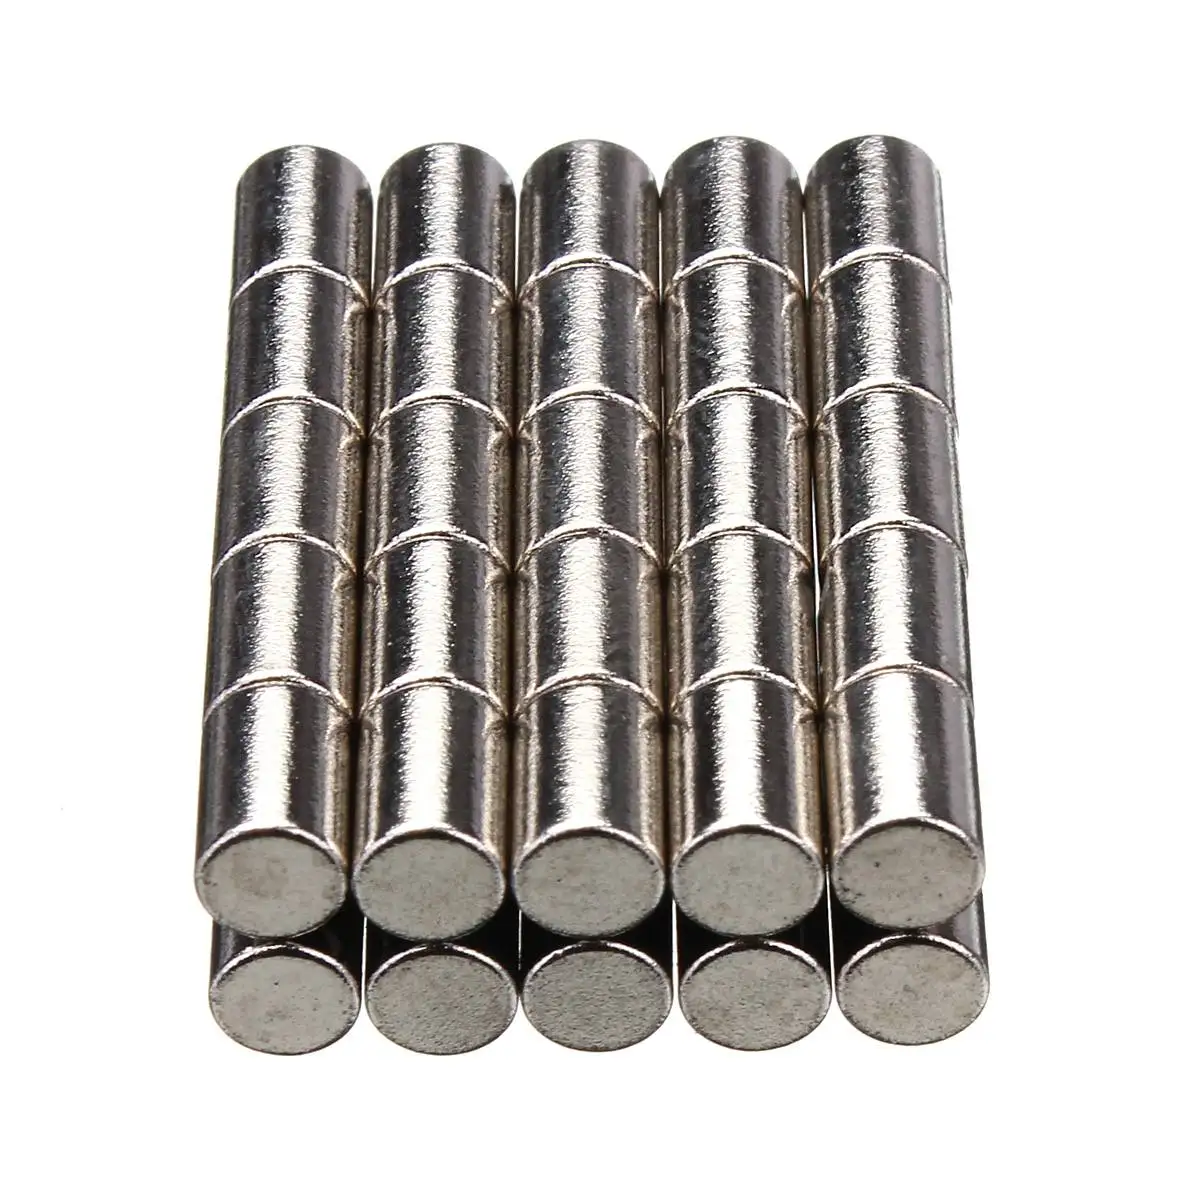 50pcs Rare Earth Neodymium 4mm x 6mm N52 Strong Mini Round Cylinder Bar Magnets 